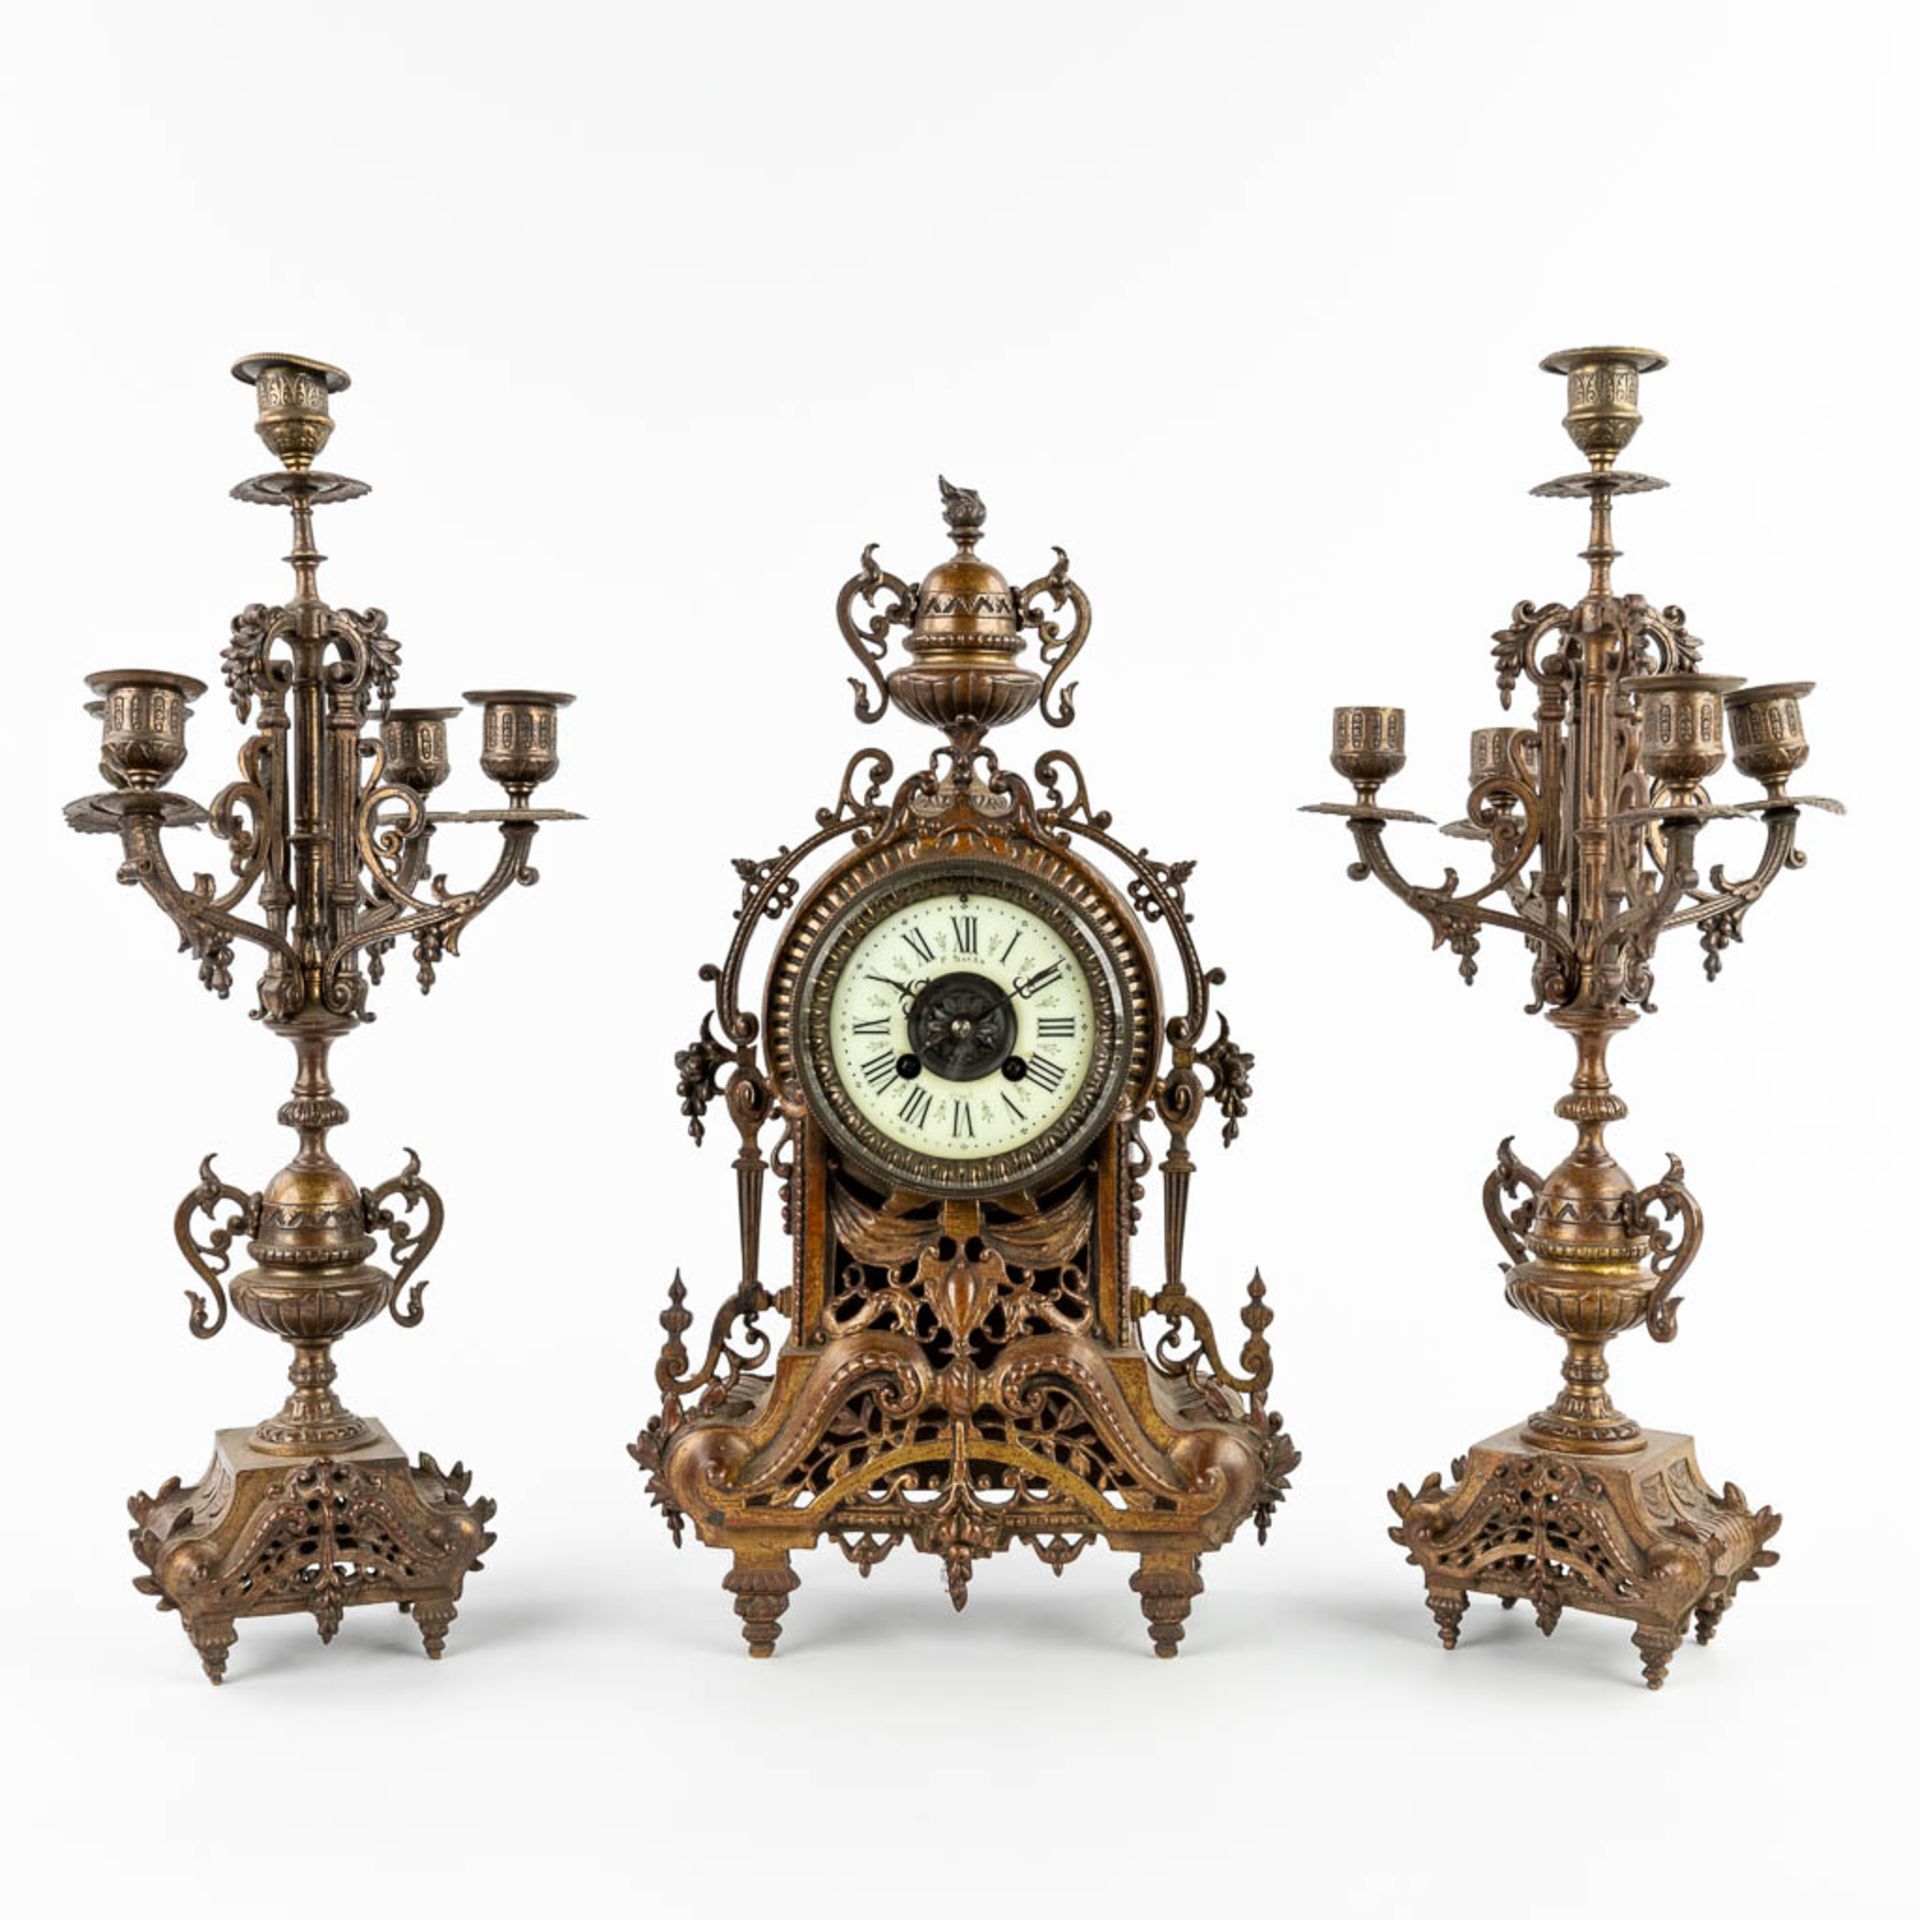 A three-piece mantle garniture clock and candelabra, patinated bronze. Circa 1900. (D:11 x W:22 x H: